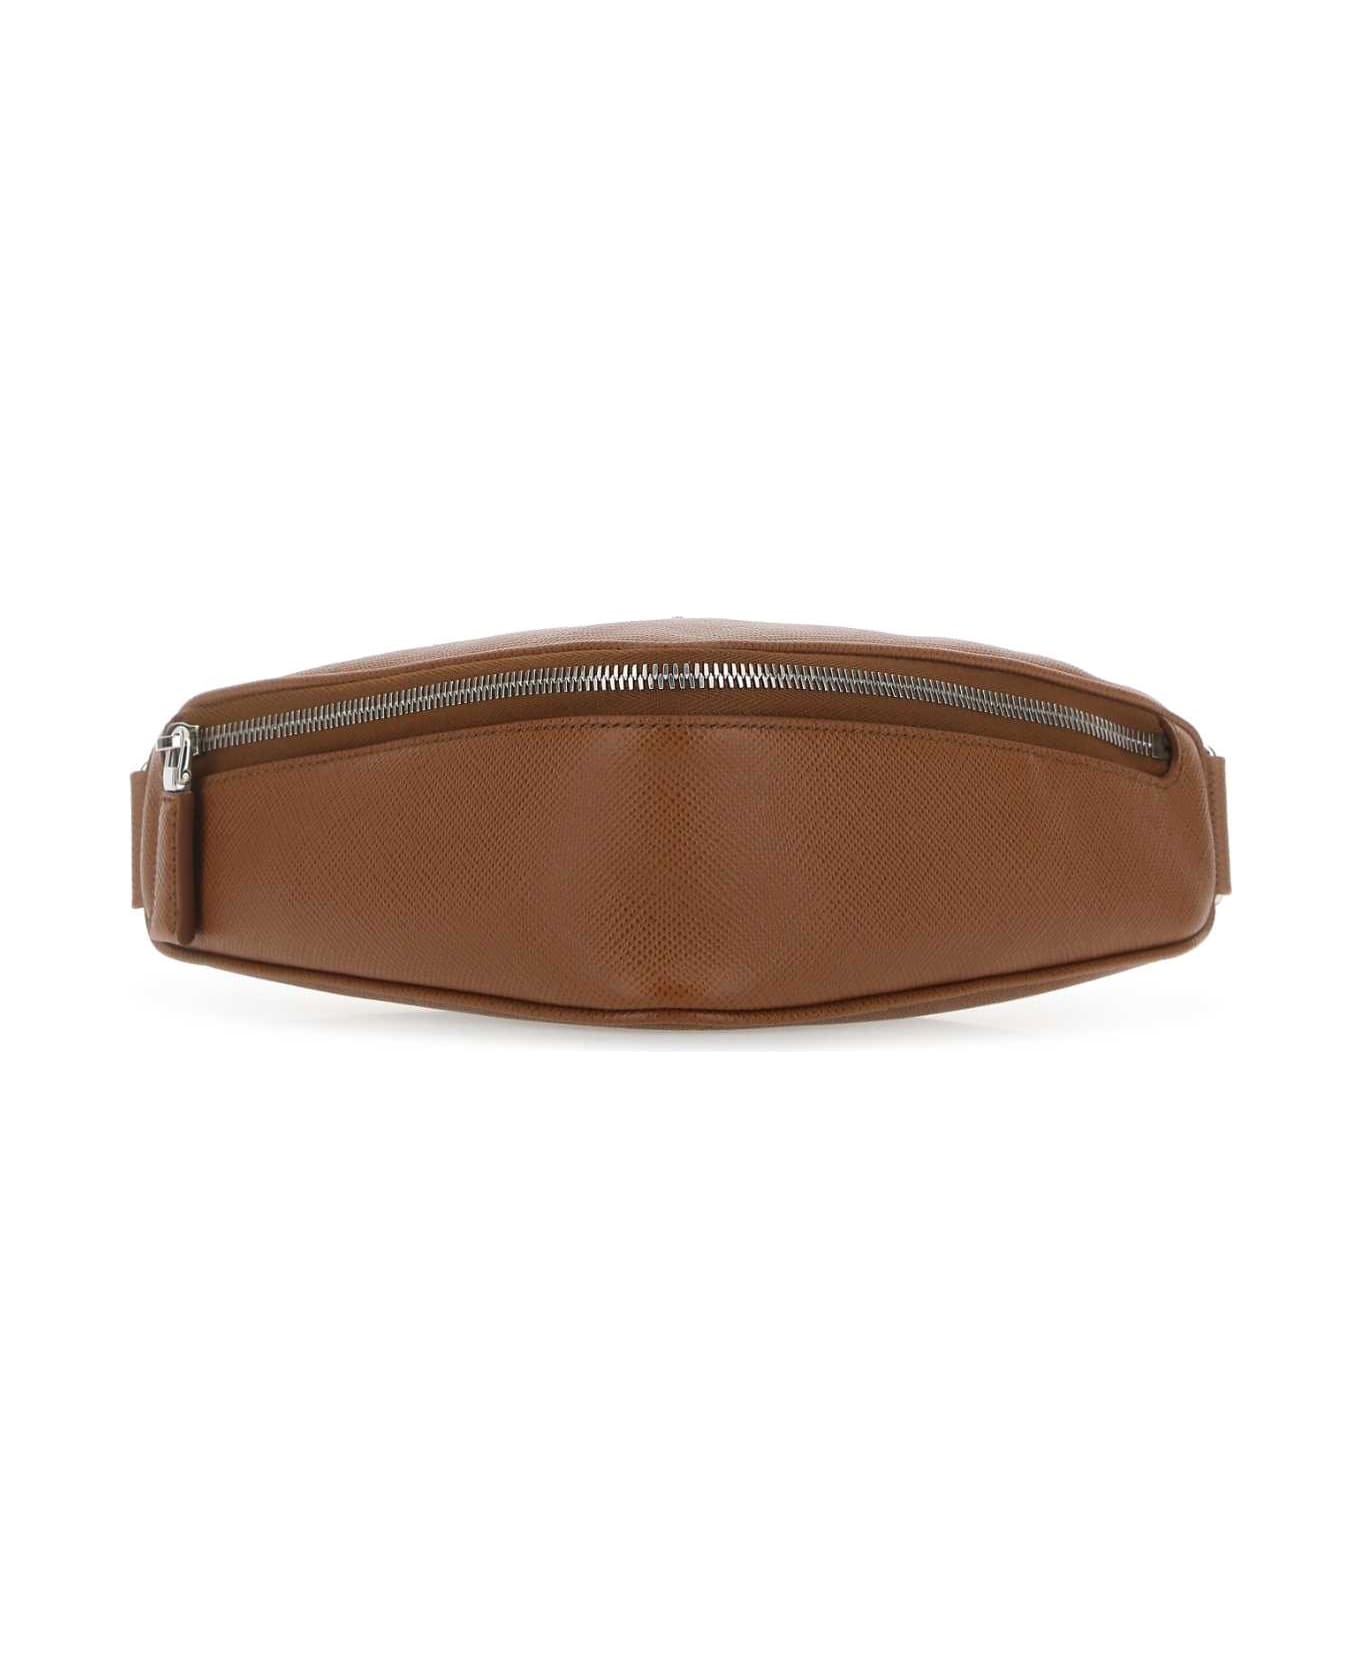 Prada Brown Leather Belt Bag - F0046